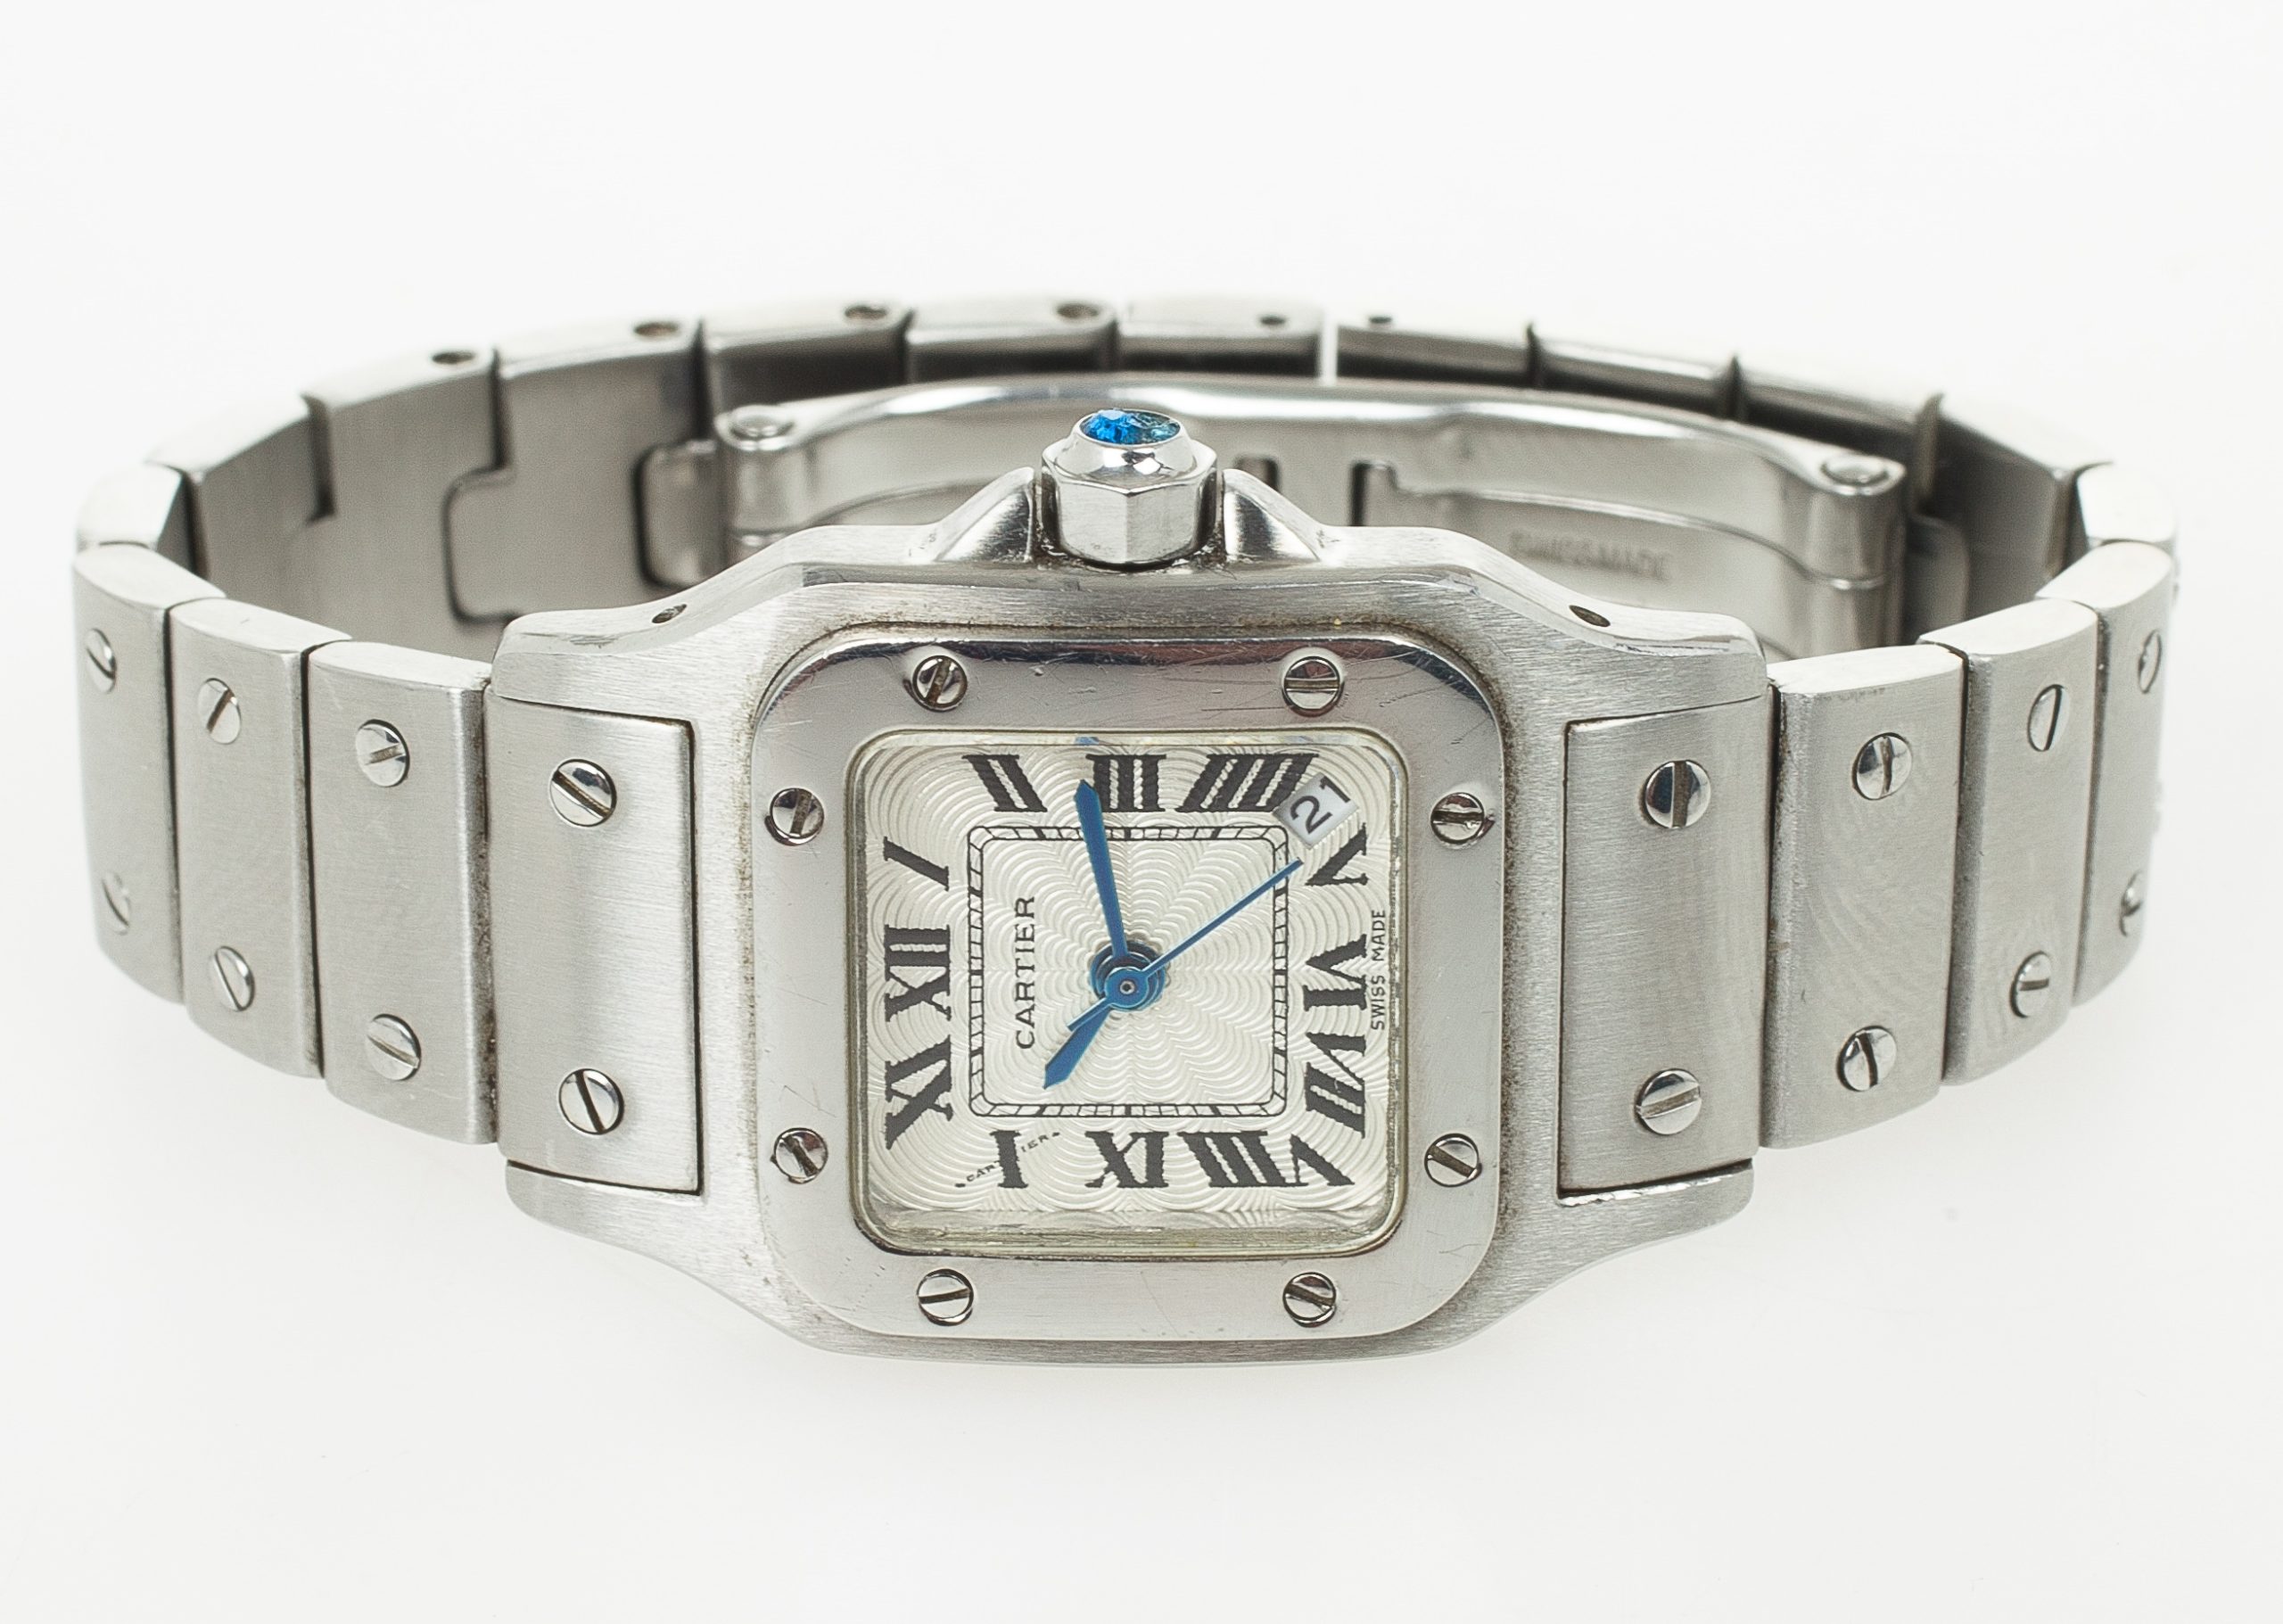 cartier watch original price